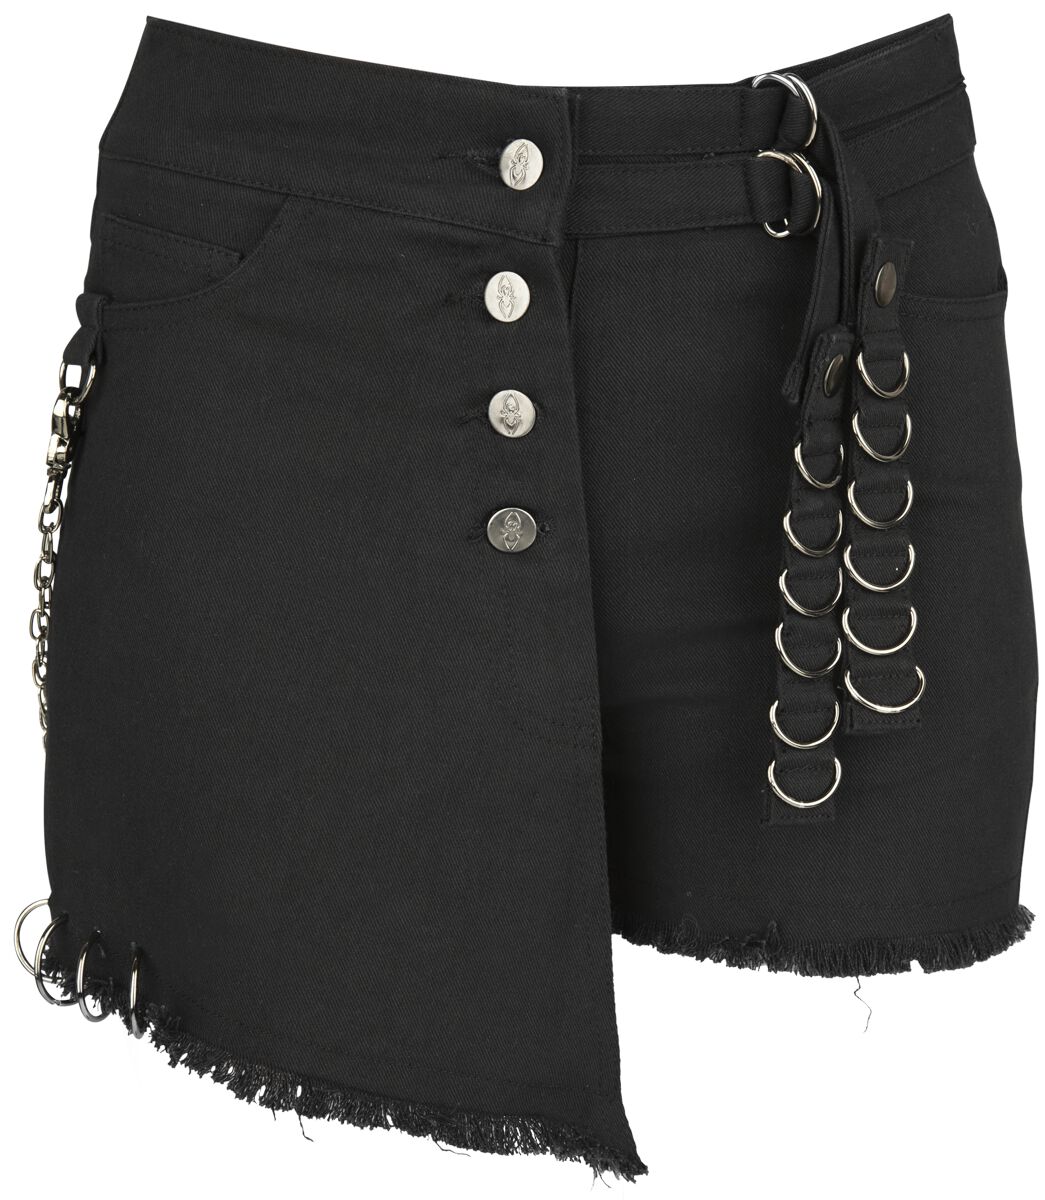 Gothicana by EMP - Black Shorts With Details - Short - schwarz - EMP Exklusiv!